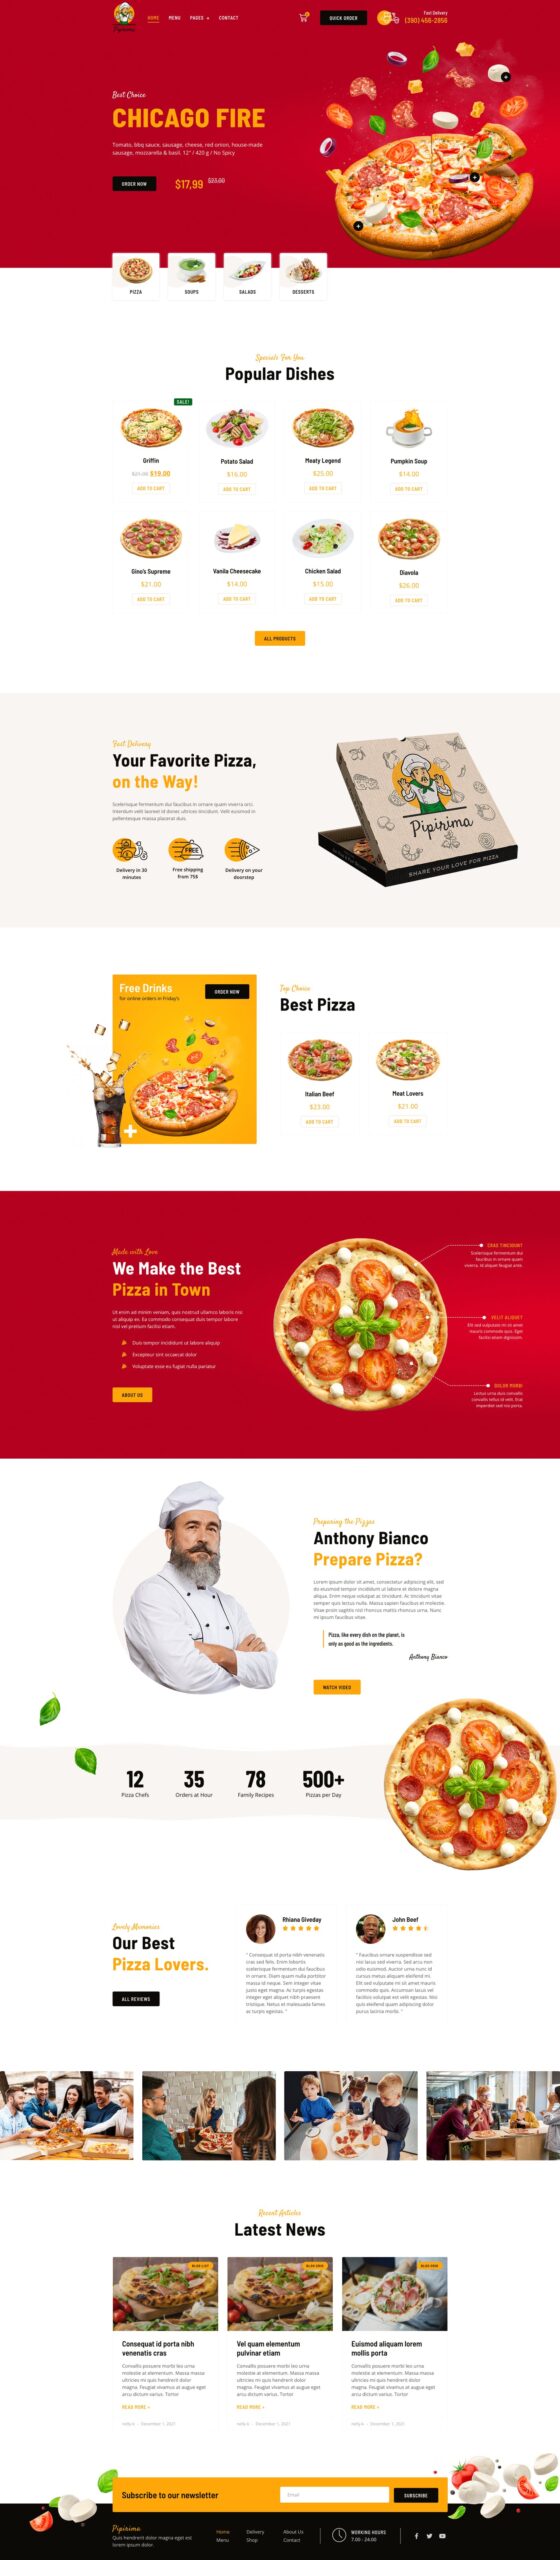 Restaurant website01